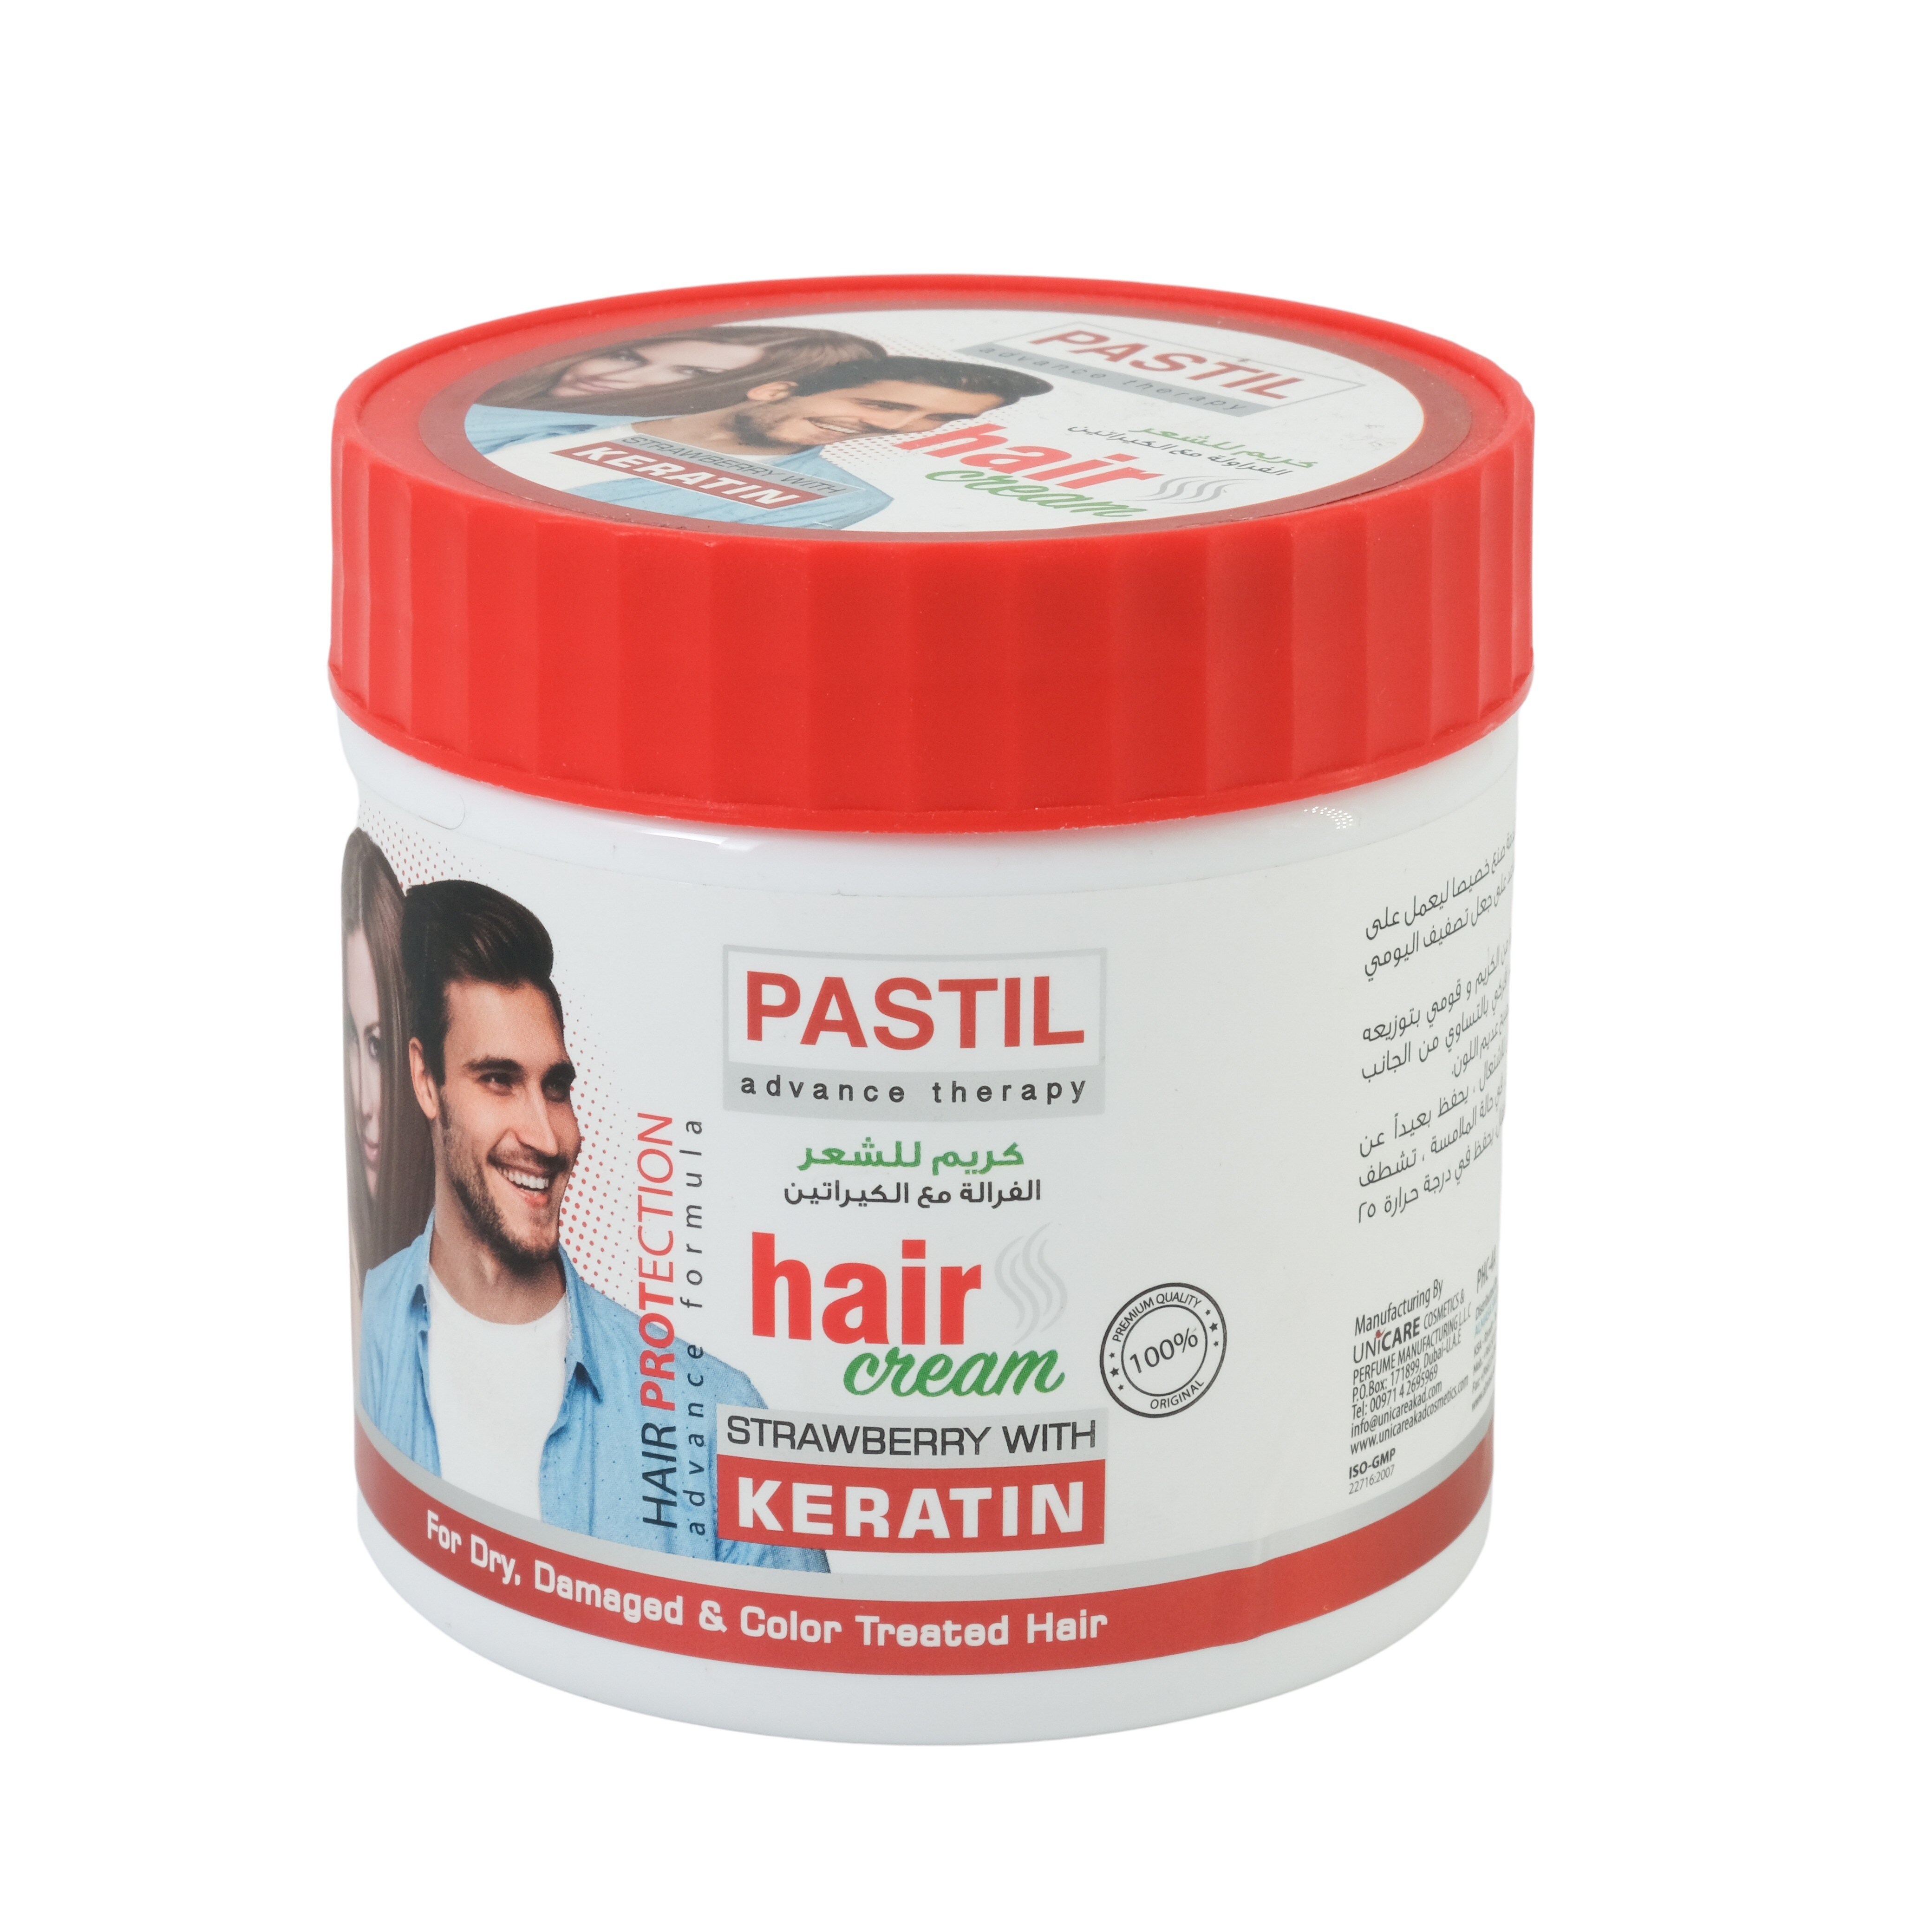 Pastil Strawberry with Keratin Hair Cream, 500ml